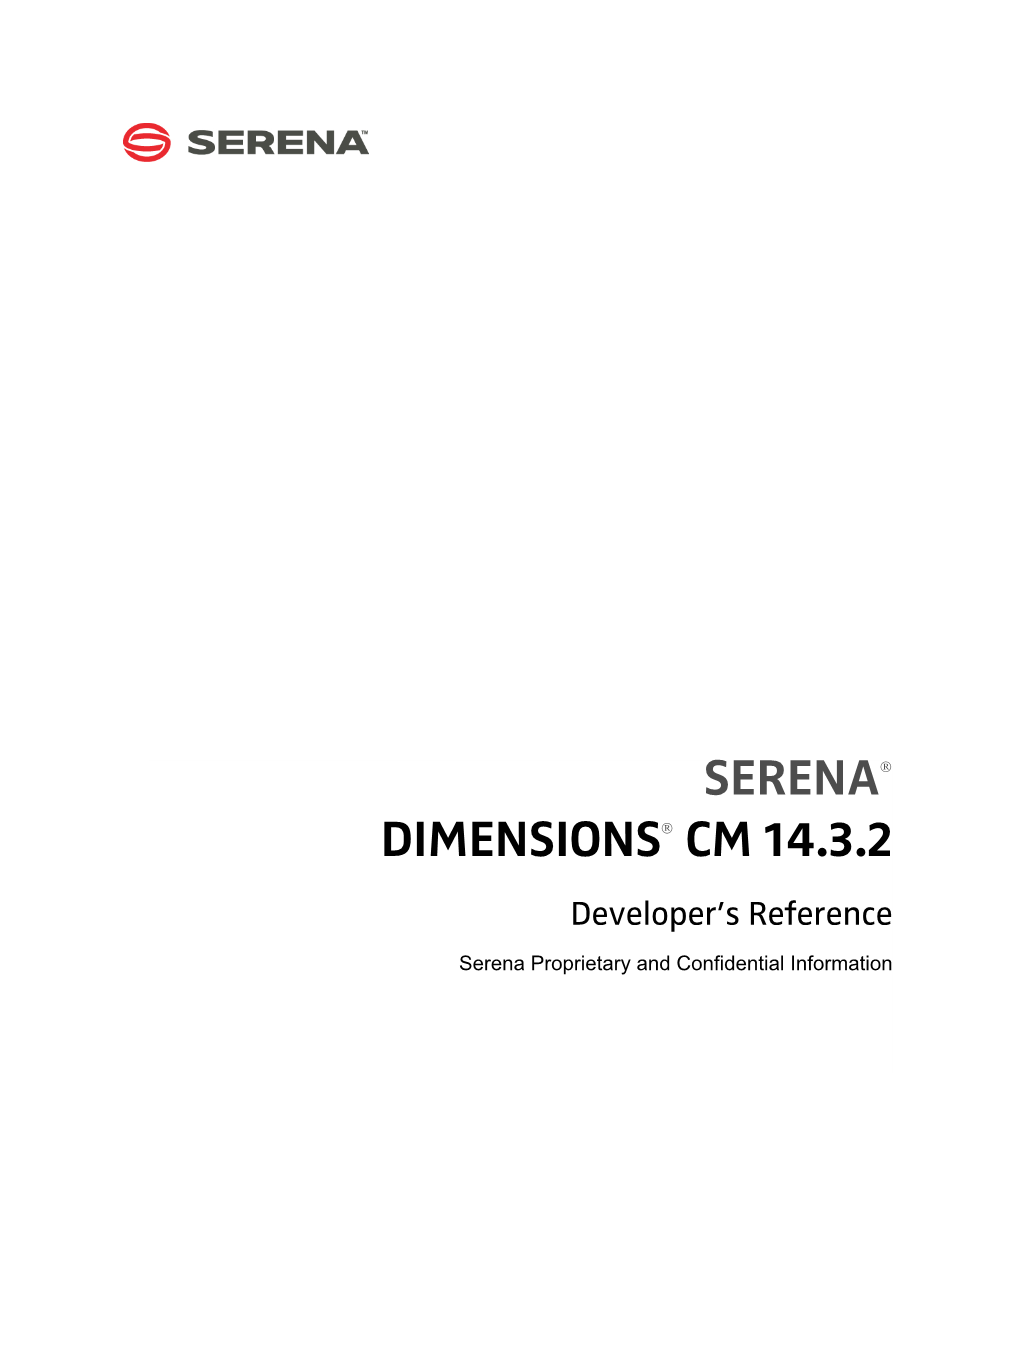 Dimensions CM Developer's Reference